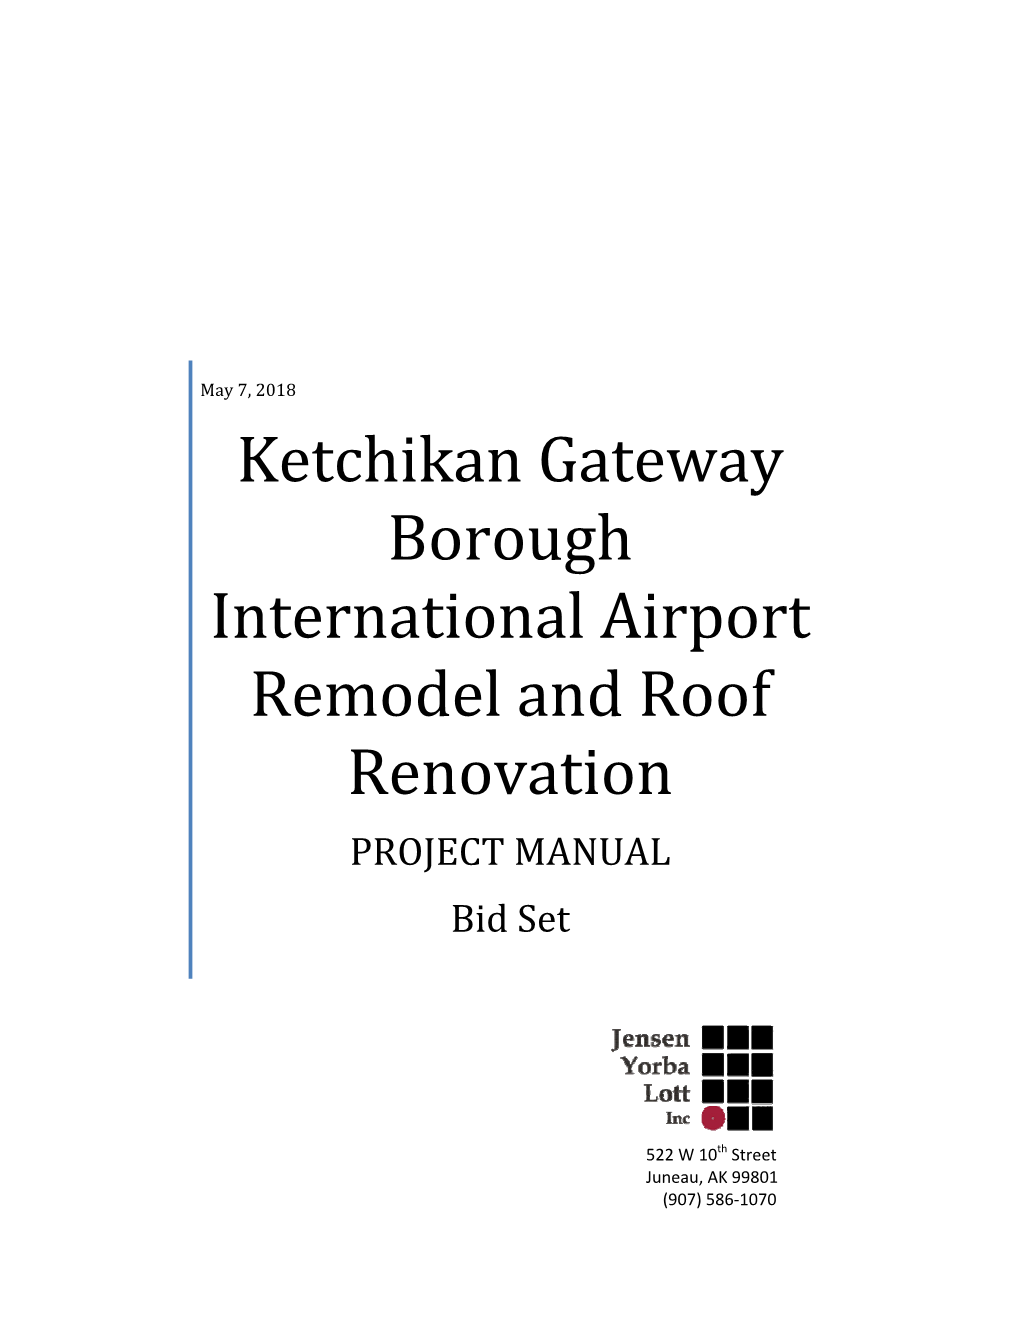 Ketchikan Gateway Borough International Airport Remodel and Roof Renovation PROJECT MANUAL Bid Set